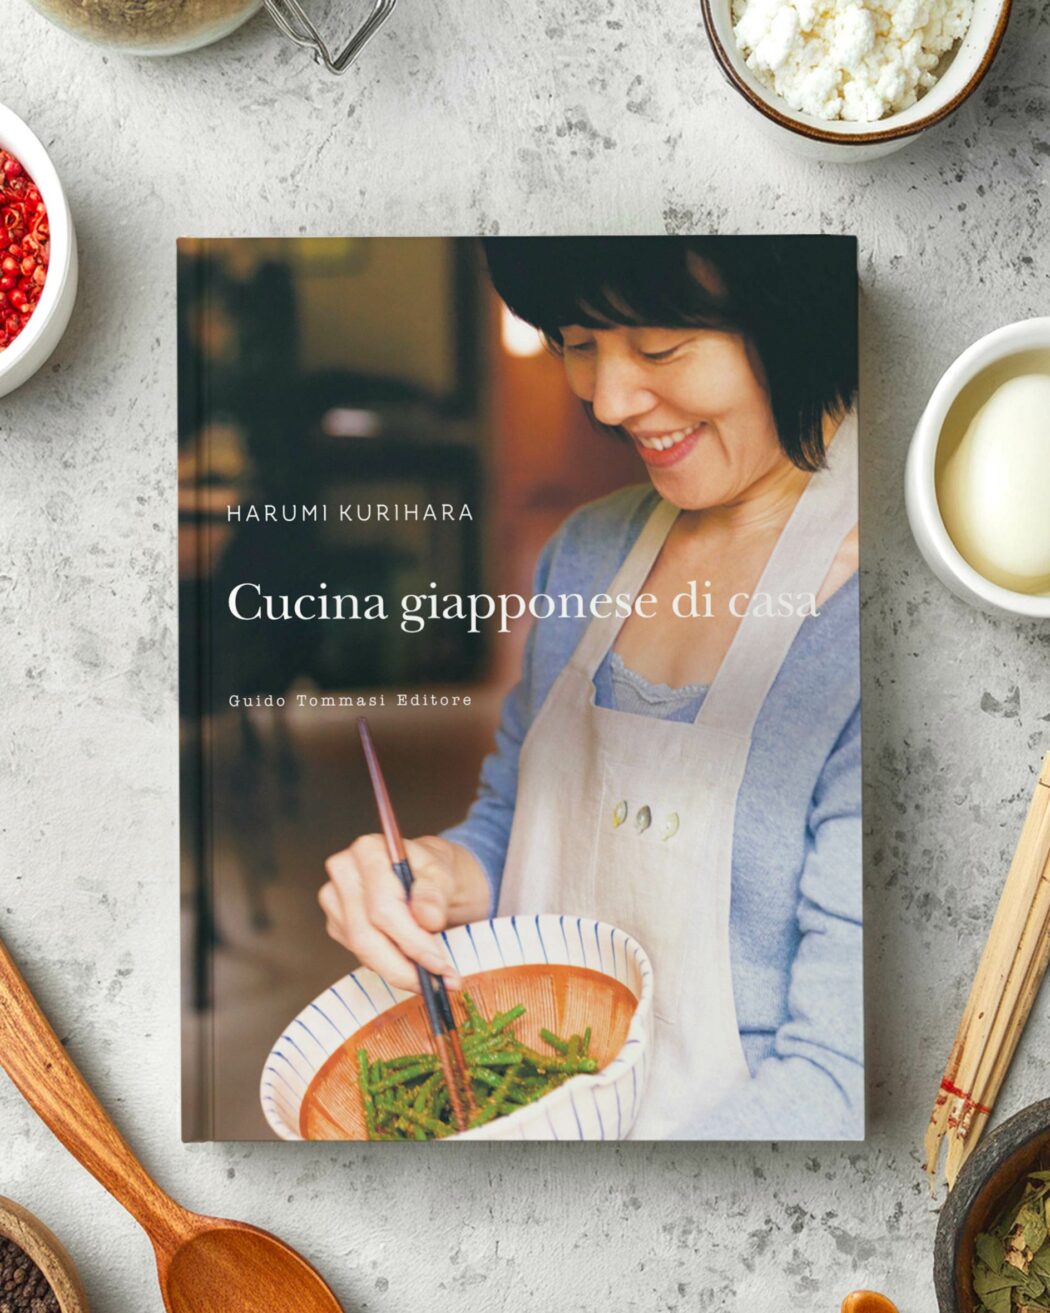 Cucina giapponese di casa: il libro di Harumi Kurihara